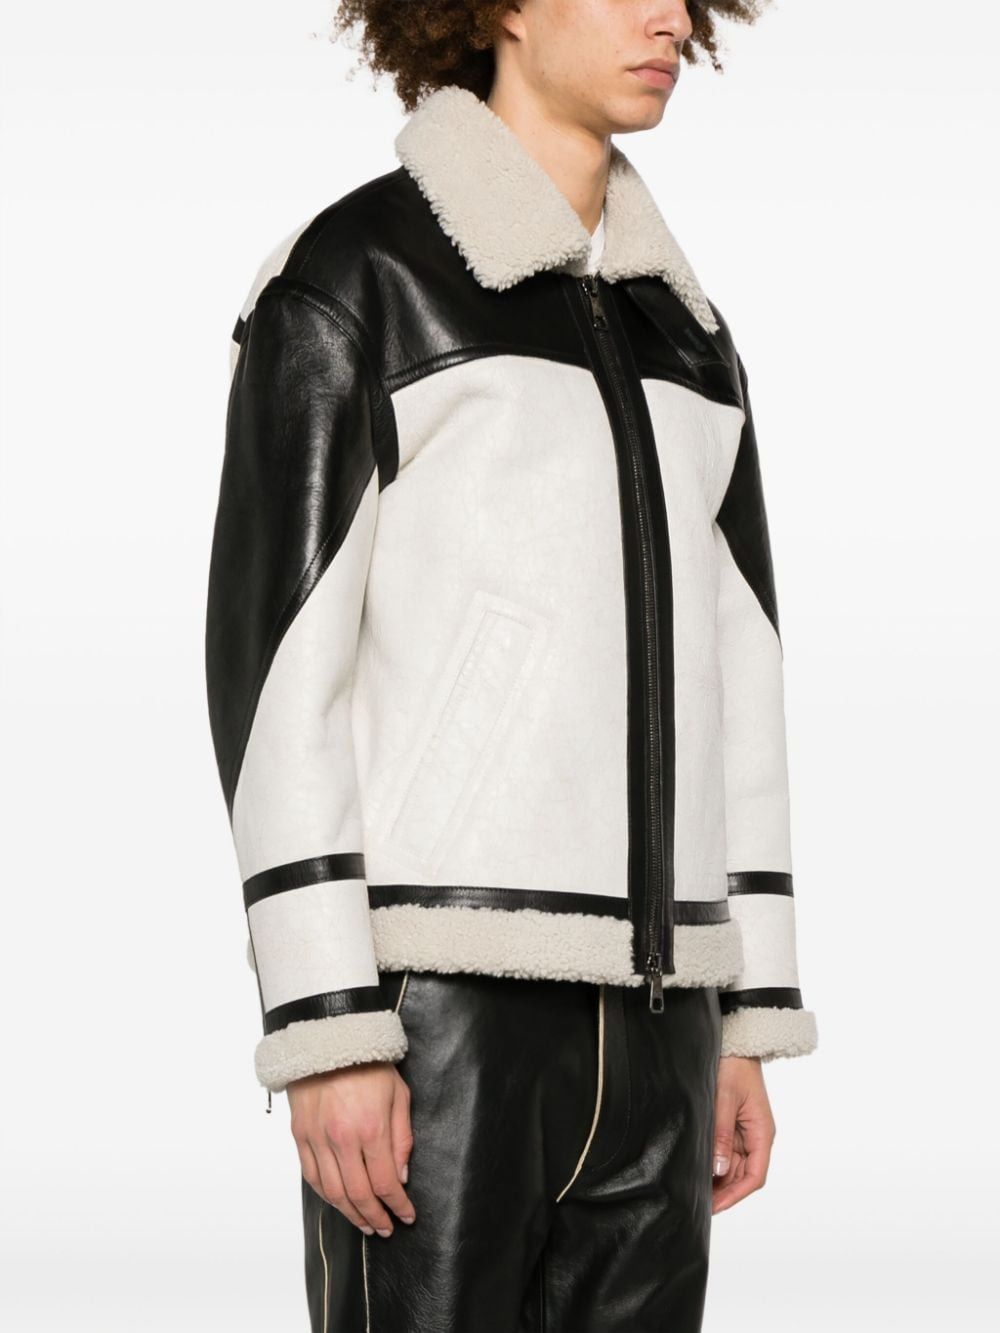 NEIL BARRETT White Fur-lined Jacket for Men - FW23 Collection